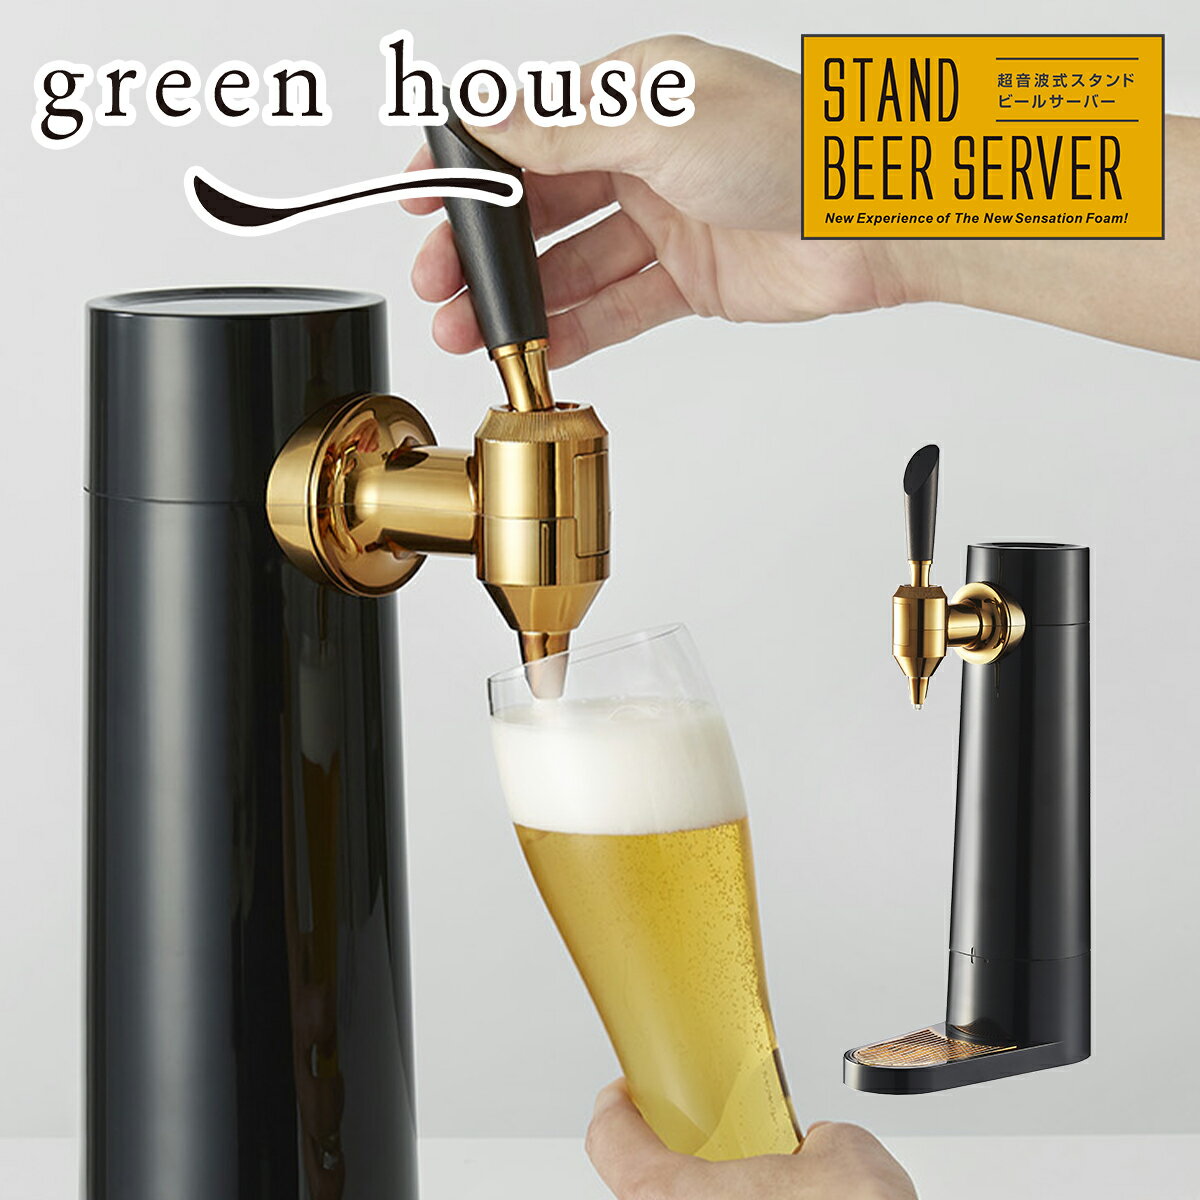 GREEN HOUSE スタンド型ビアサーバー ビールサーバー 超音波式スタンド型ビールサーバー 家庭用 宅呑み コードレス グリーンハウス ギフト・のし可